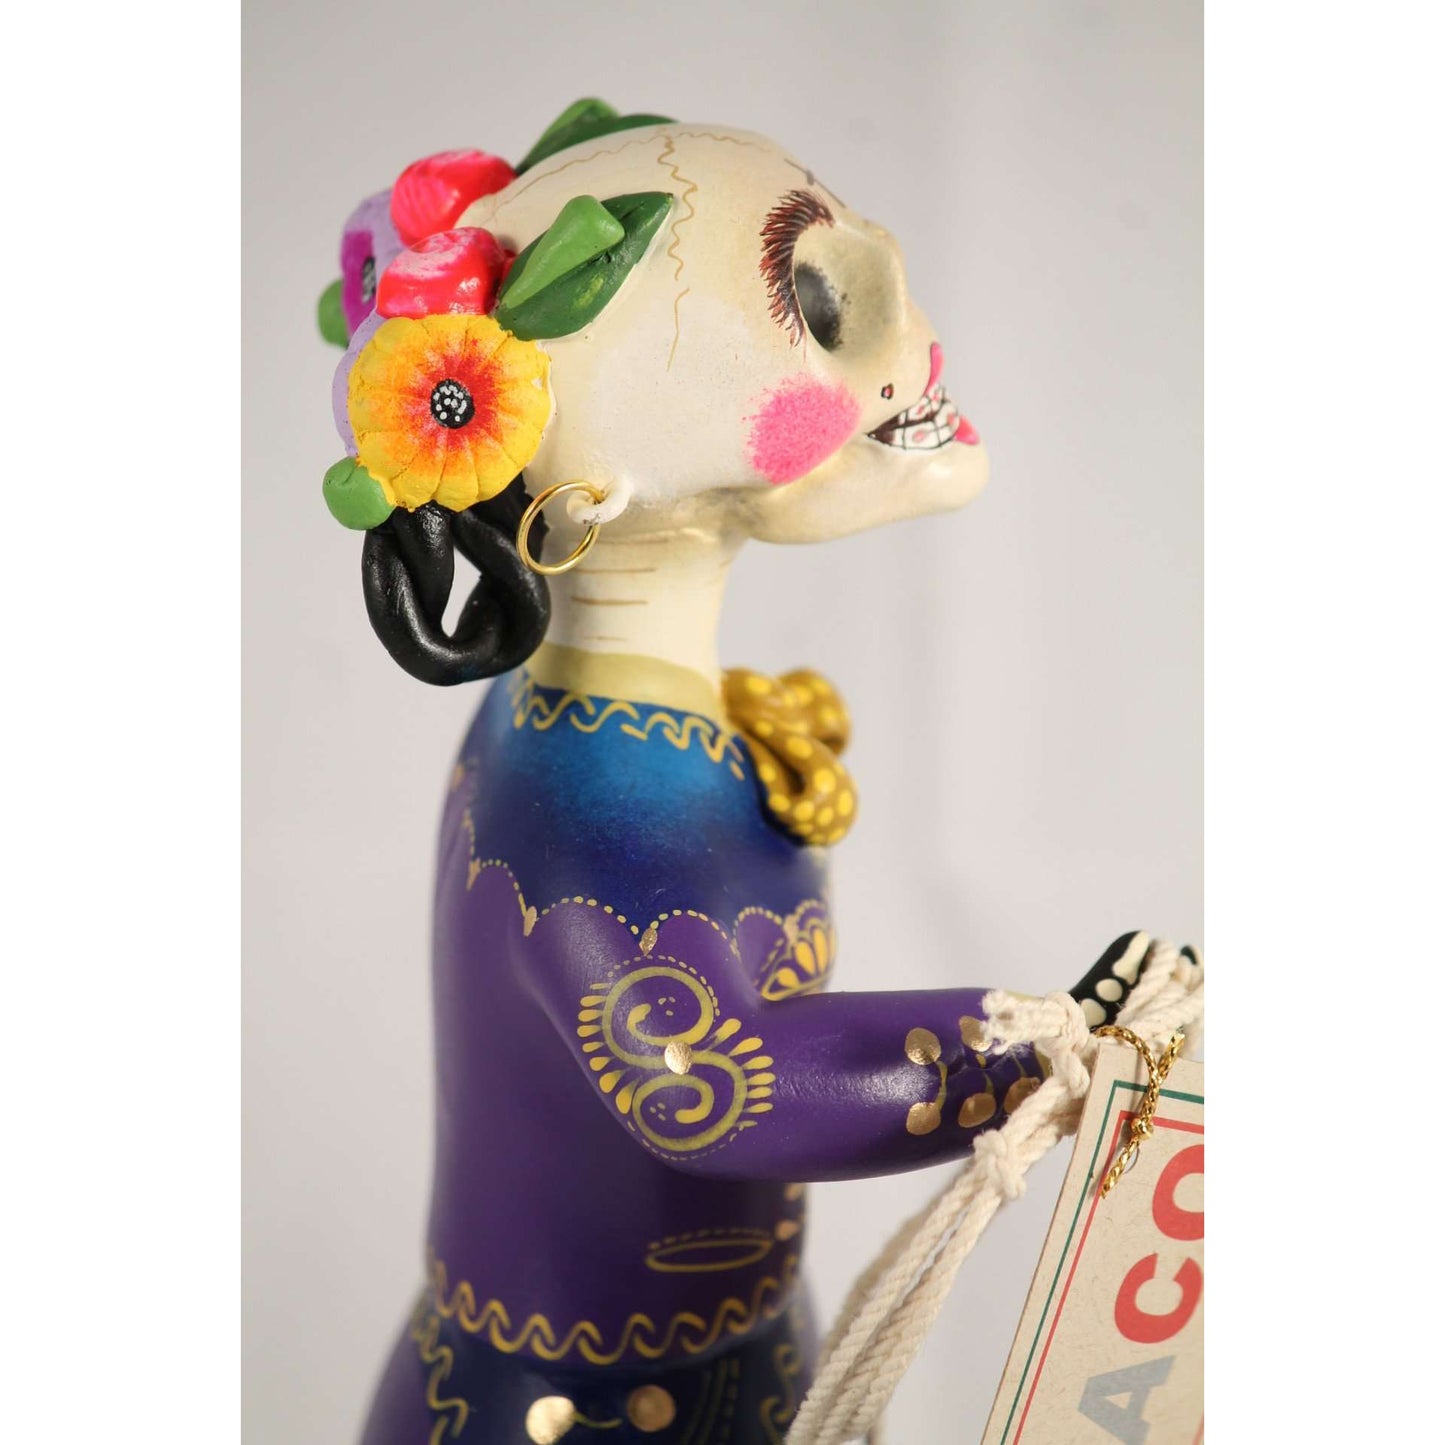 Lupita Figurine Day of the Dead "Charra Catrina" Plum Dress Ceramic Mexican